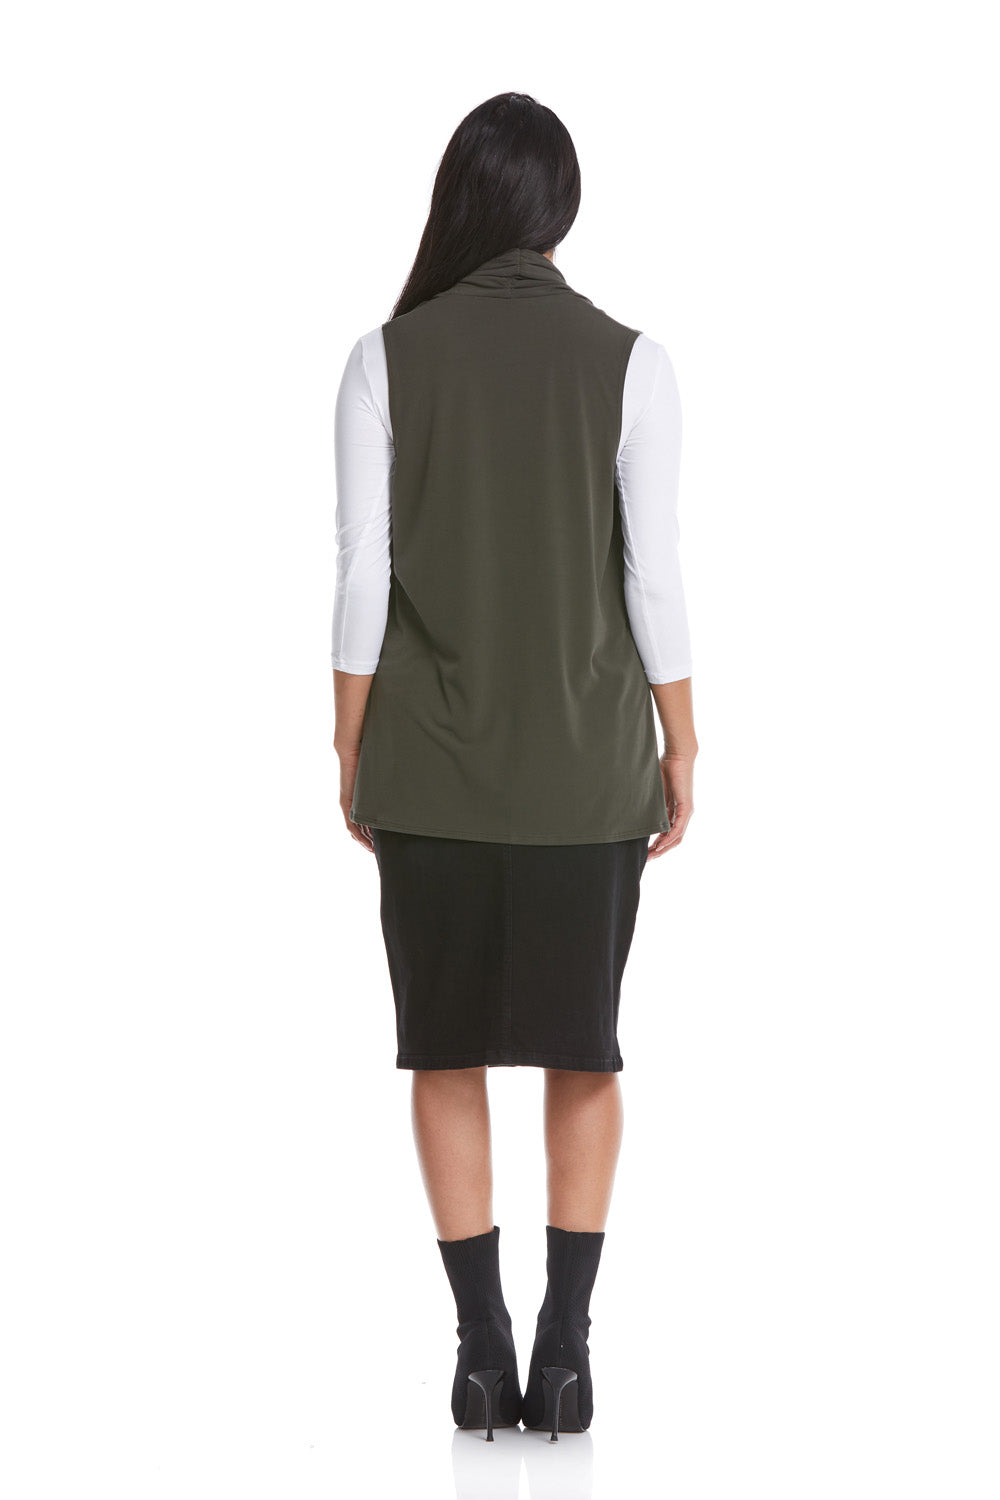 Esteez AZALEA - Women's Sleeveless Loose Fitting Open Front Vest - OLIVE